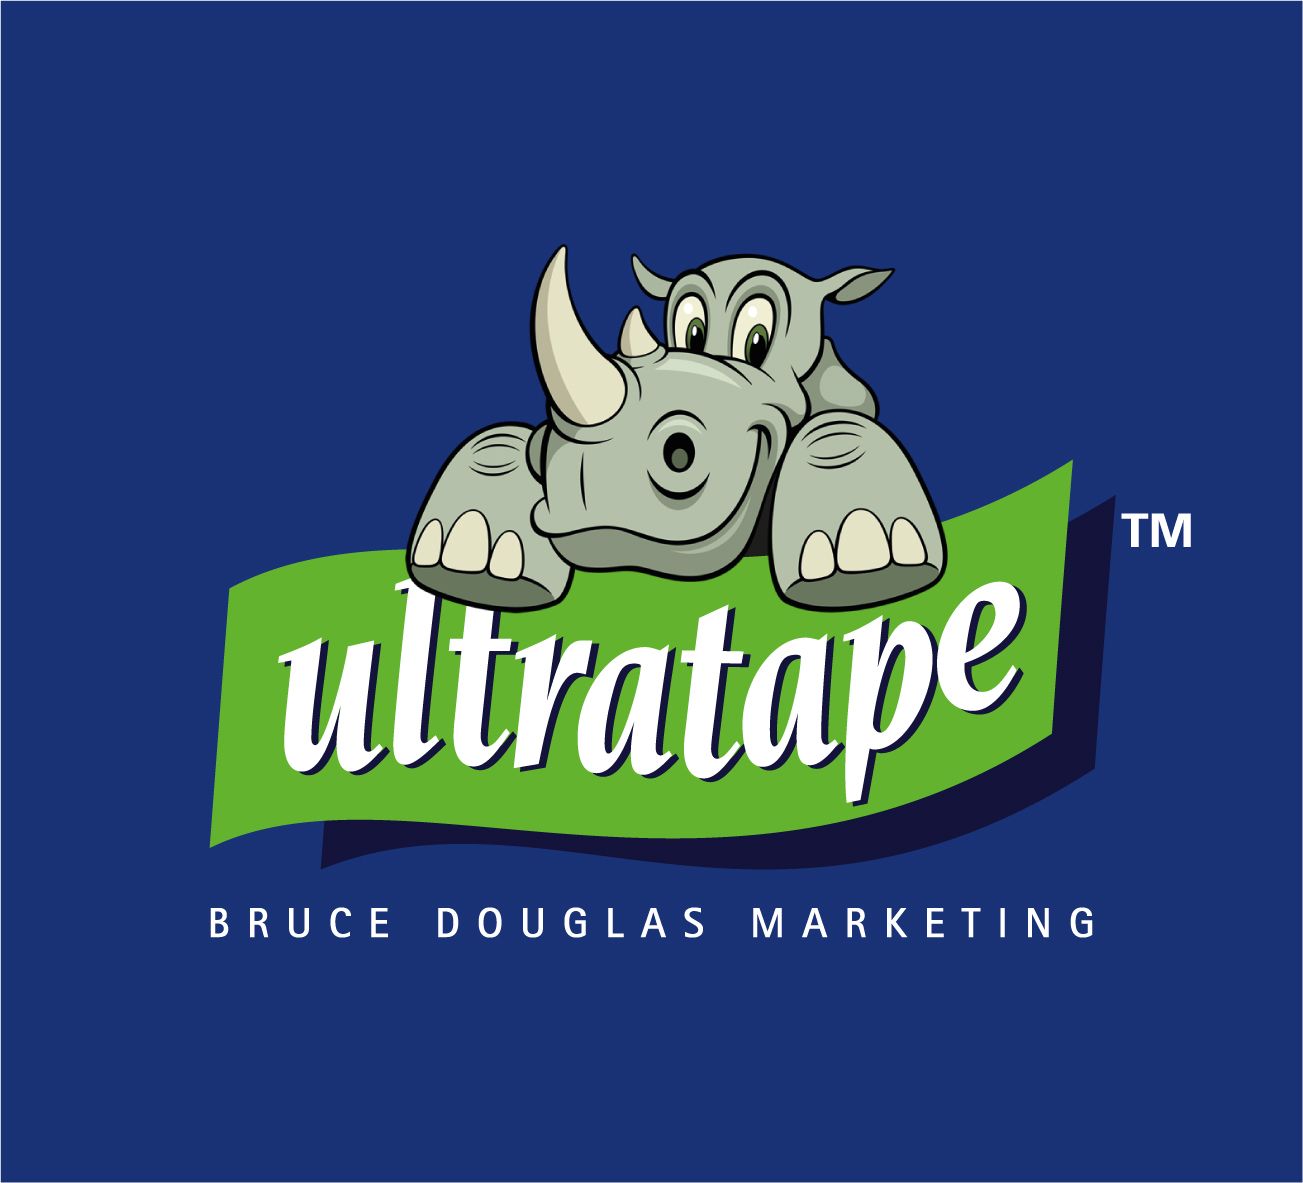 Bruce Douglas Marketing Ltd